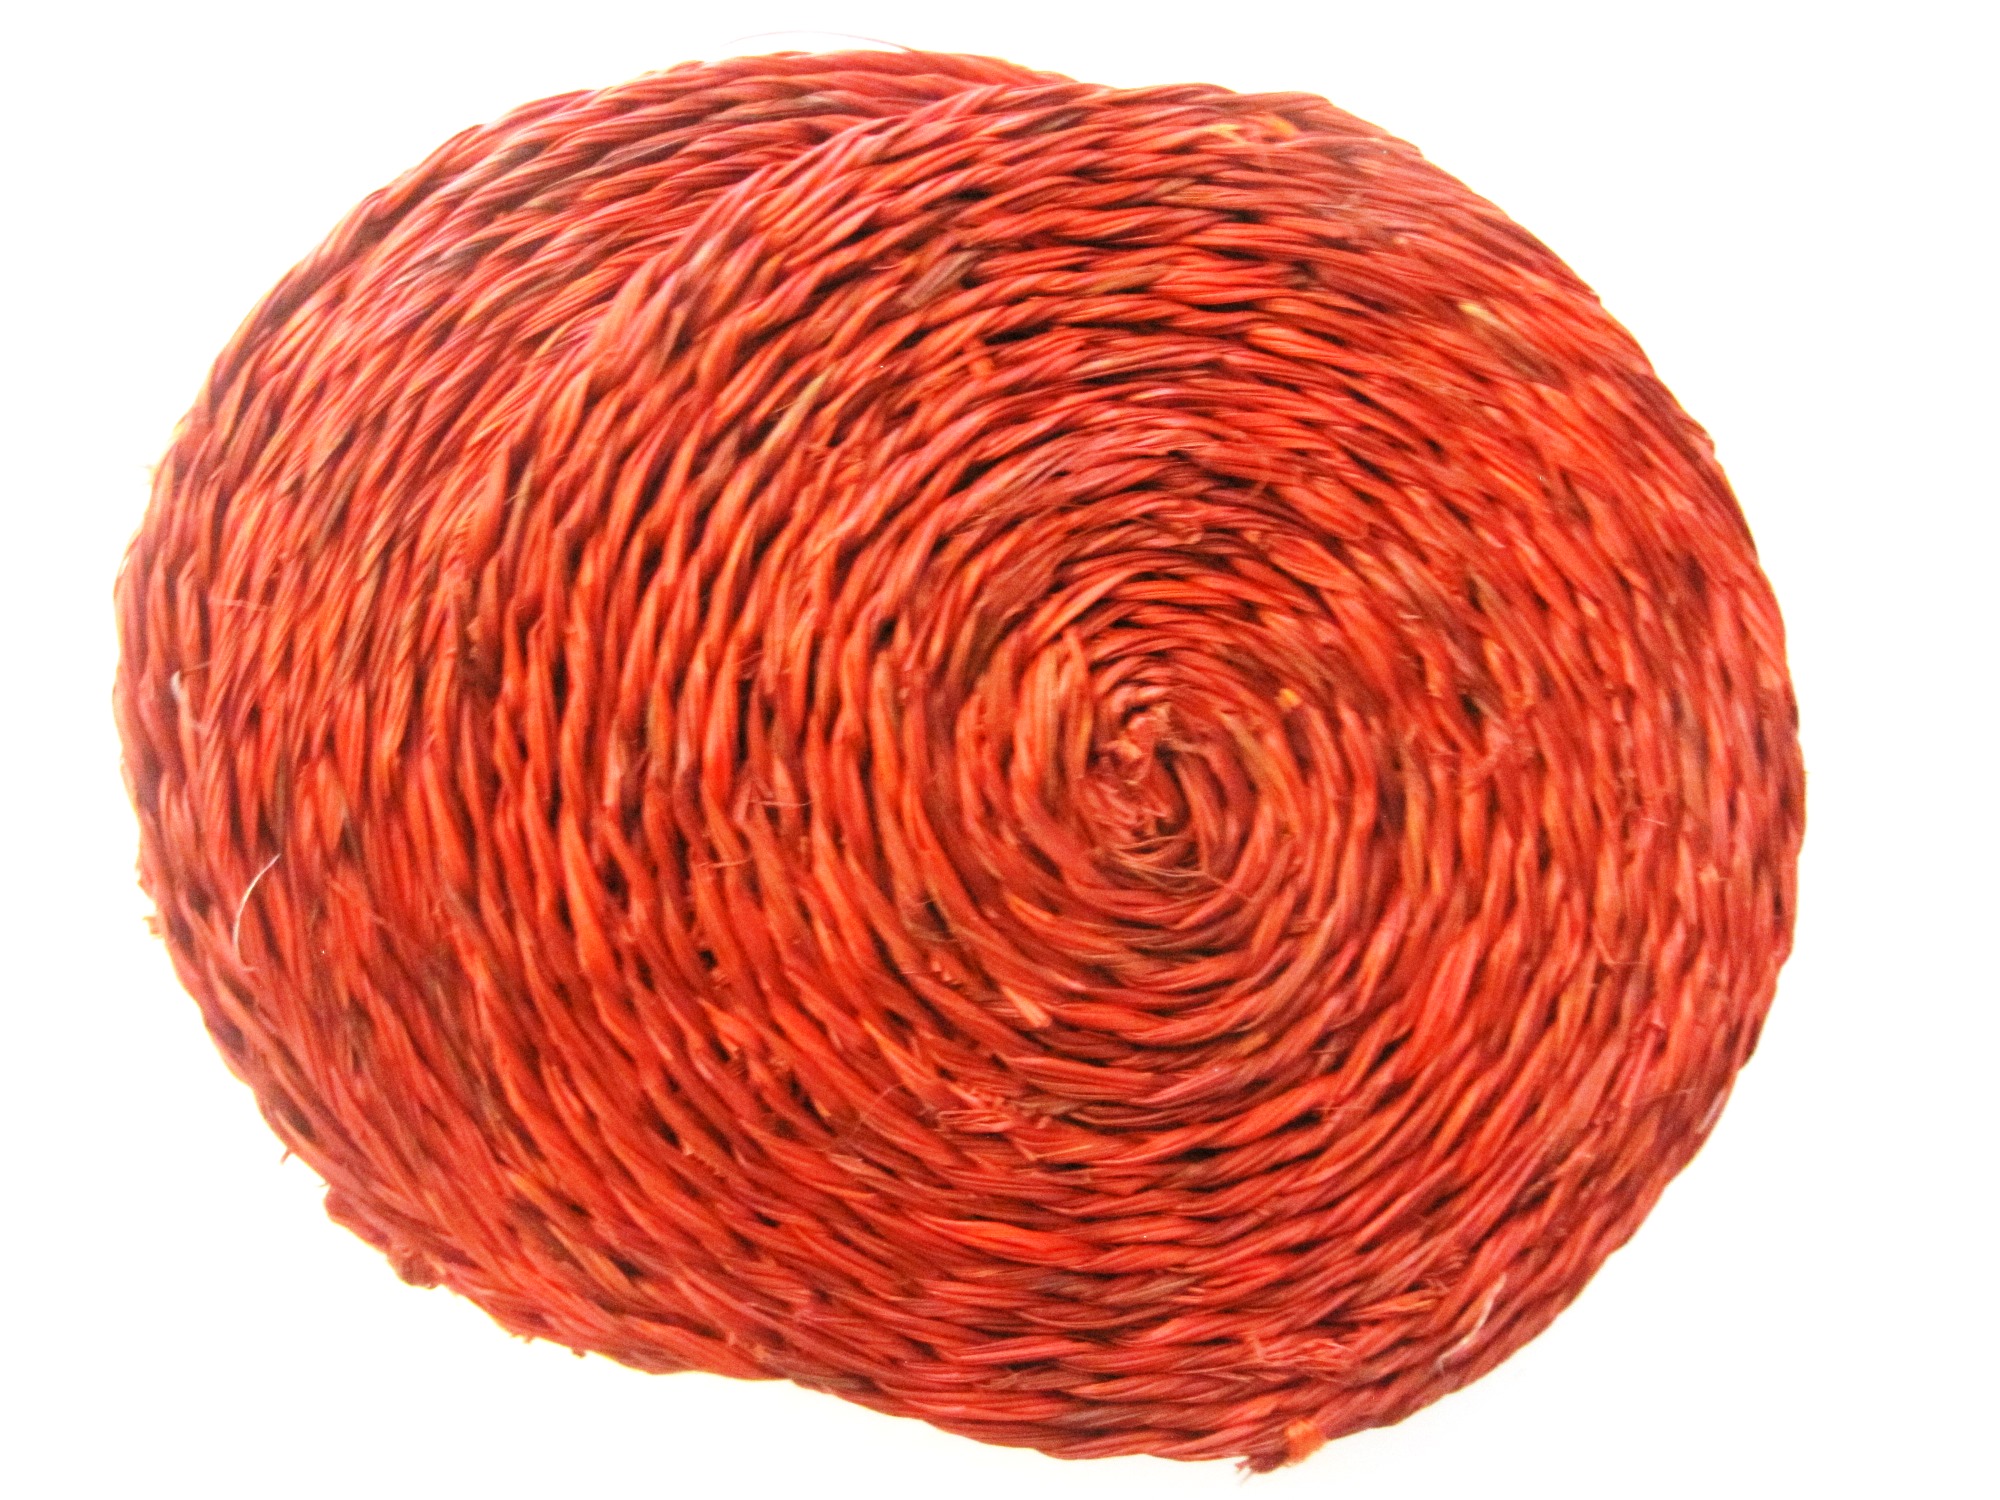 Lutindzi Grass Handwoven Coaster Set of 6 -  Reds